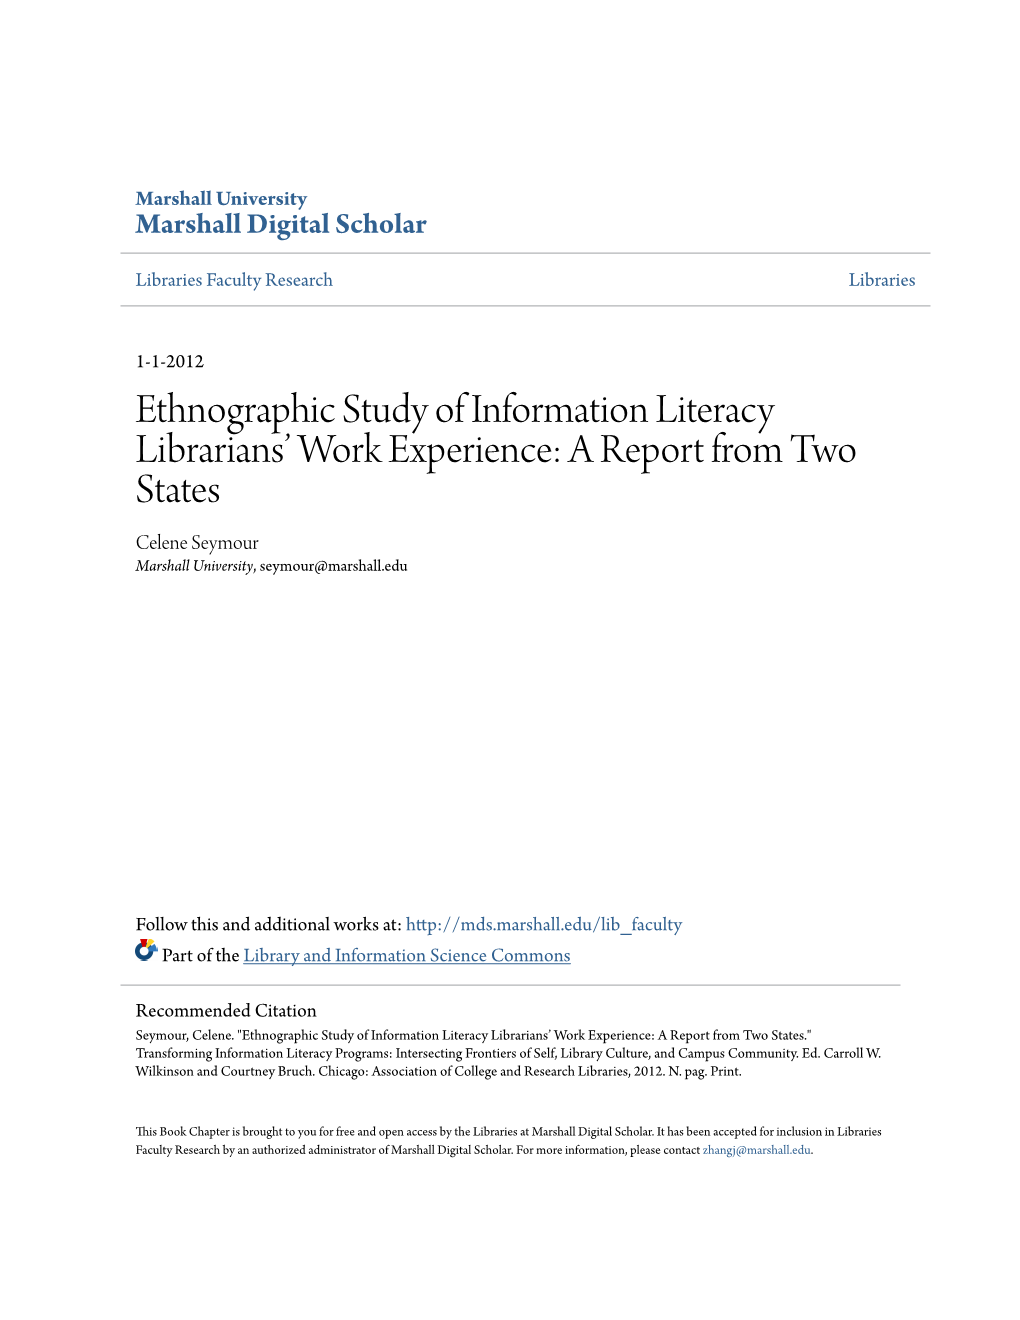 Ethnographic Study of Information Literacy Librarians' Work